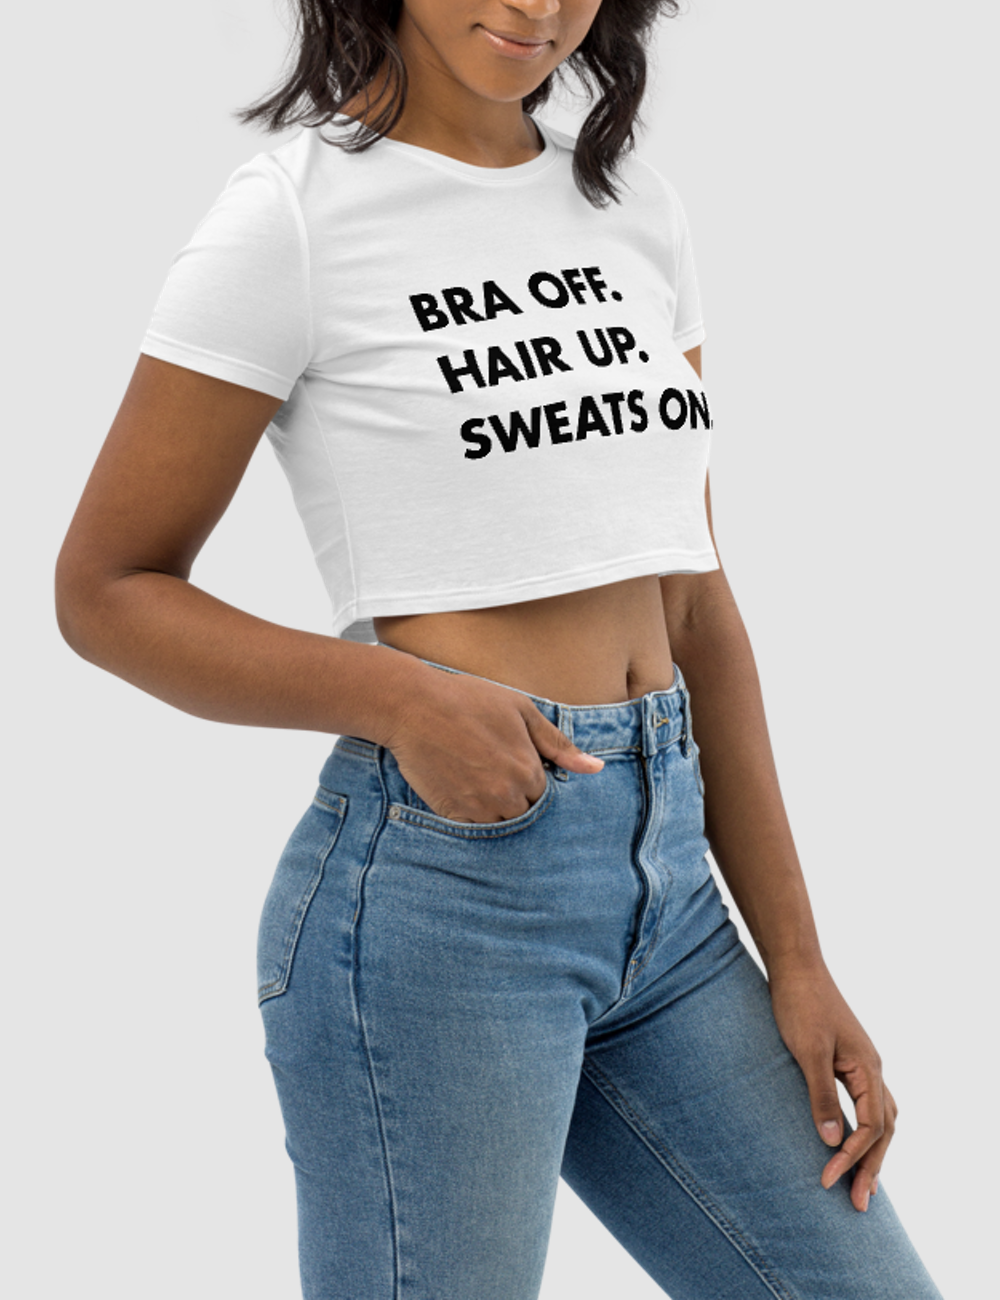 Bra Off. Hair Up. Sweats On. | Women's Crop Top T-Shirt OniTakai